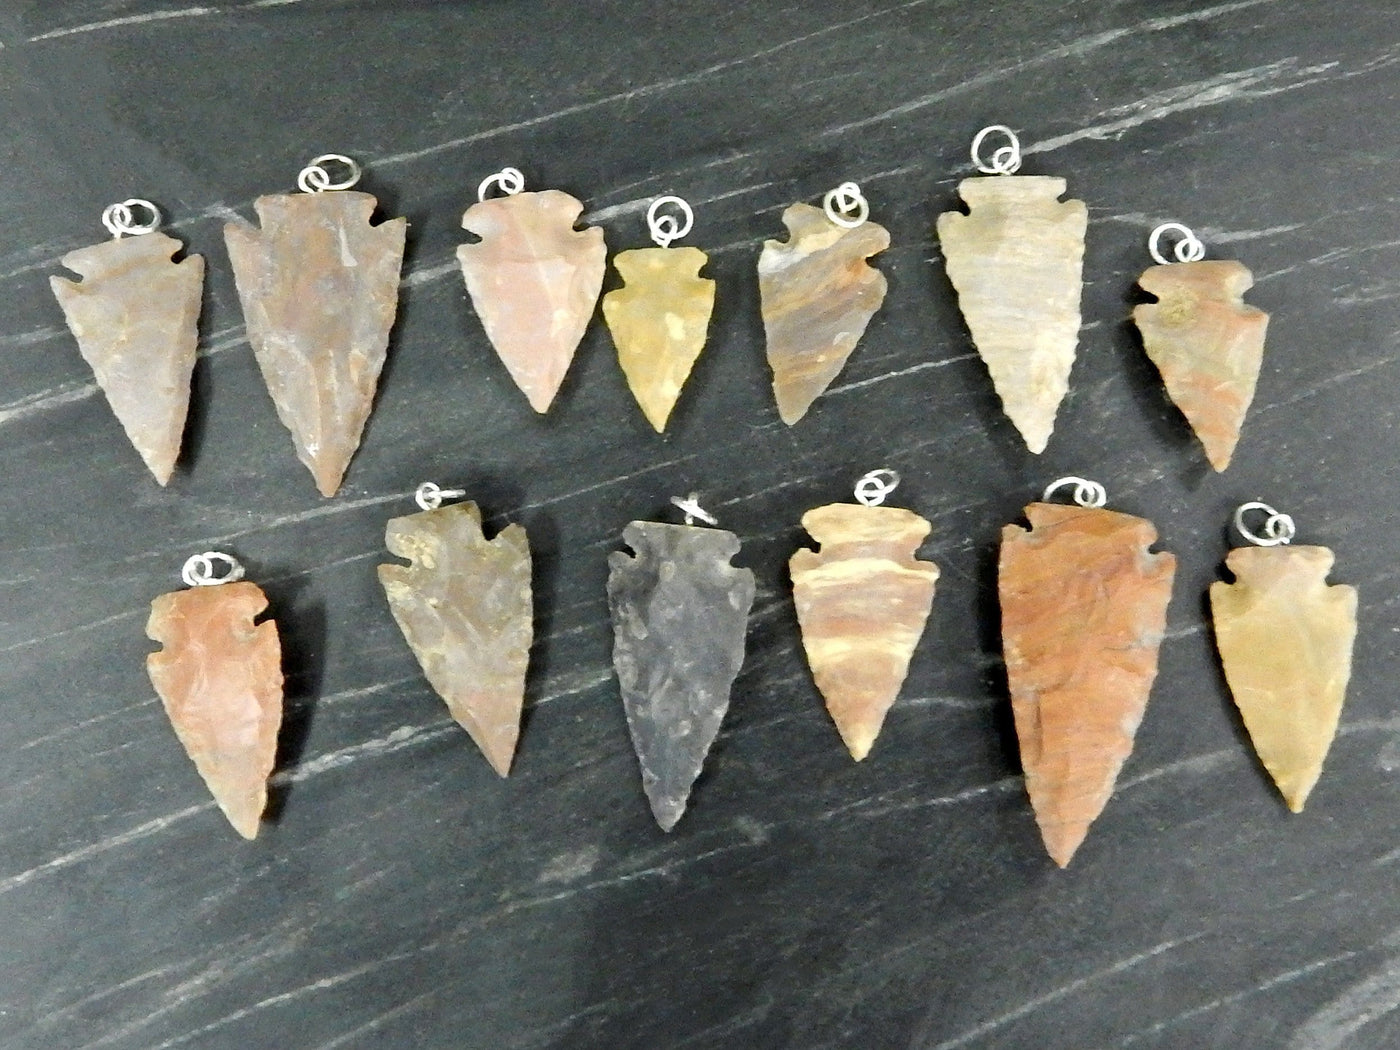 arrowhead pendants lined up on black background